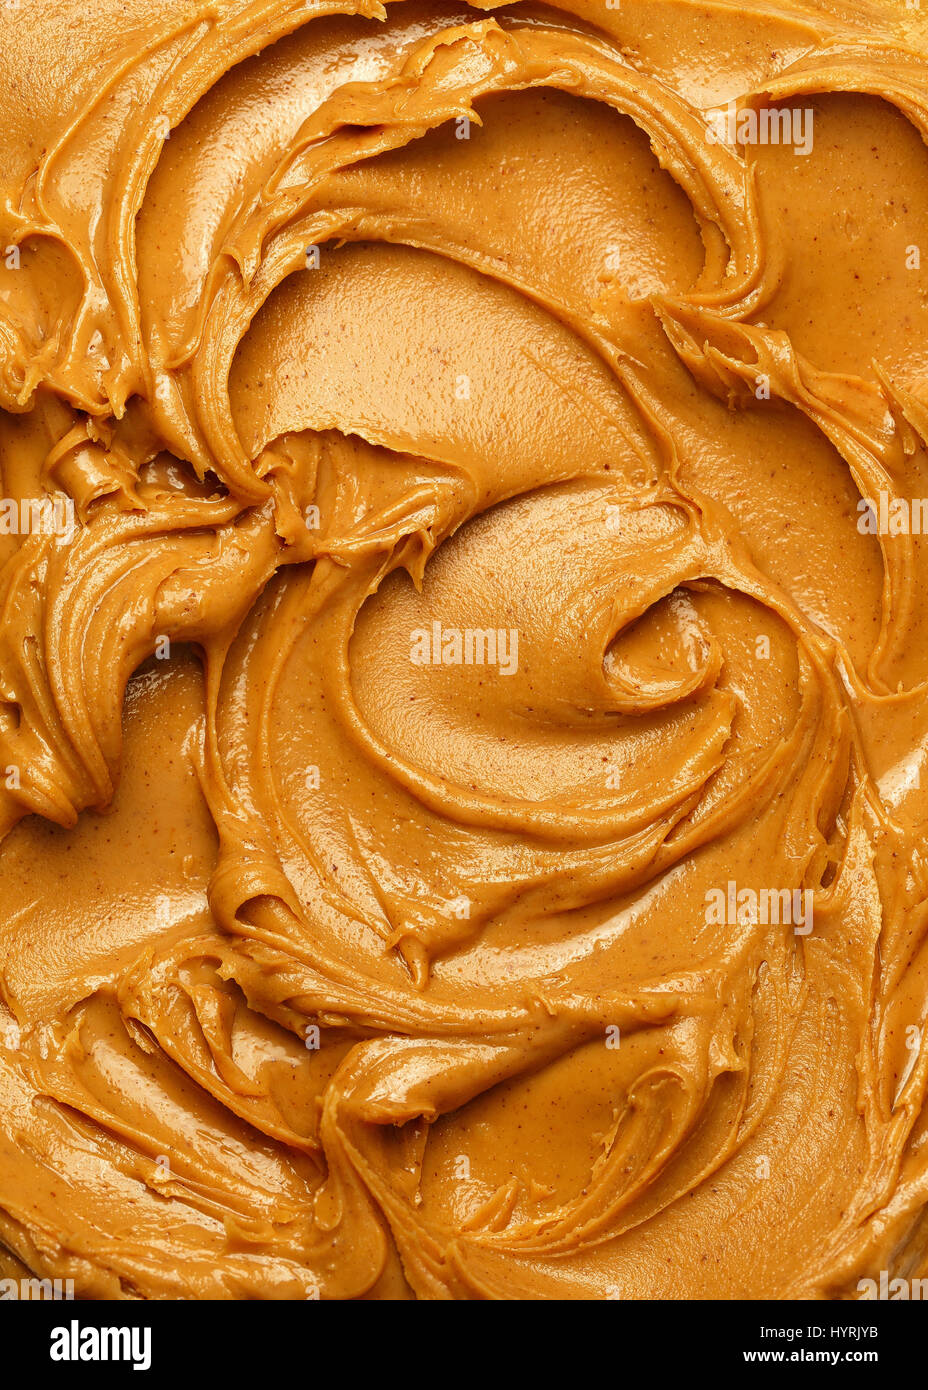 Swirls of creamy peanut butter spread. Stock Photo